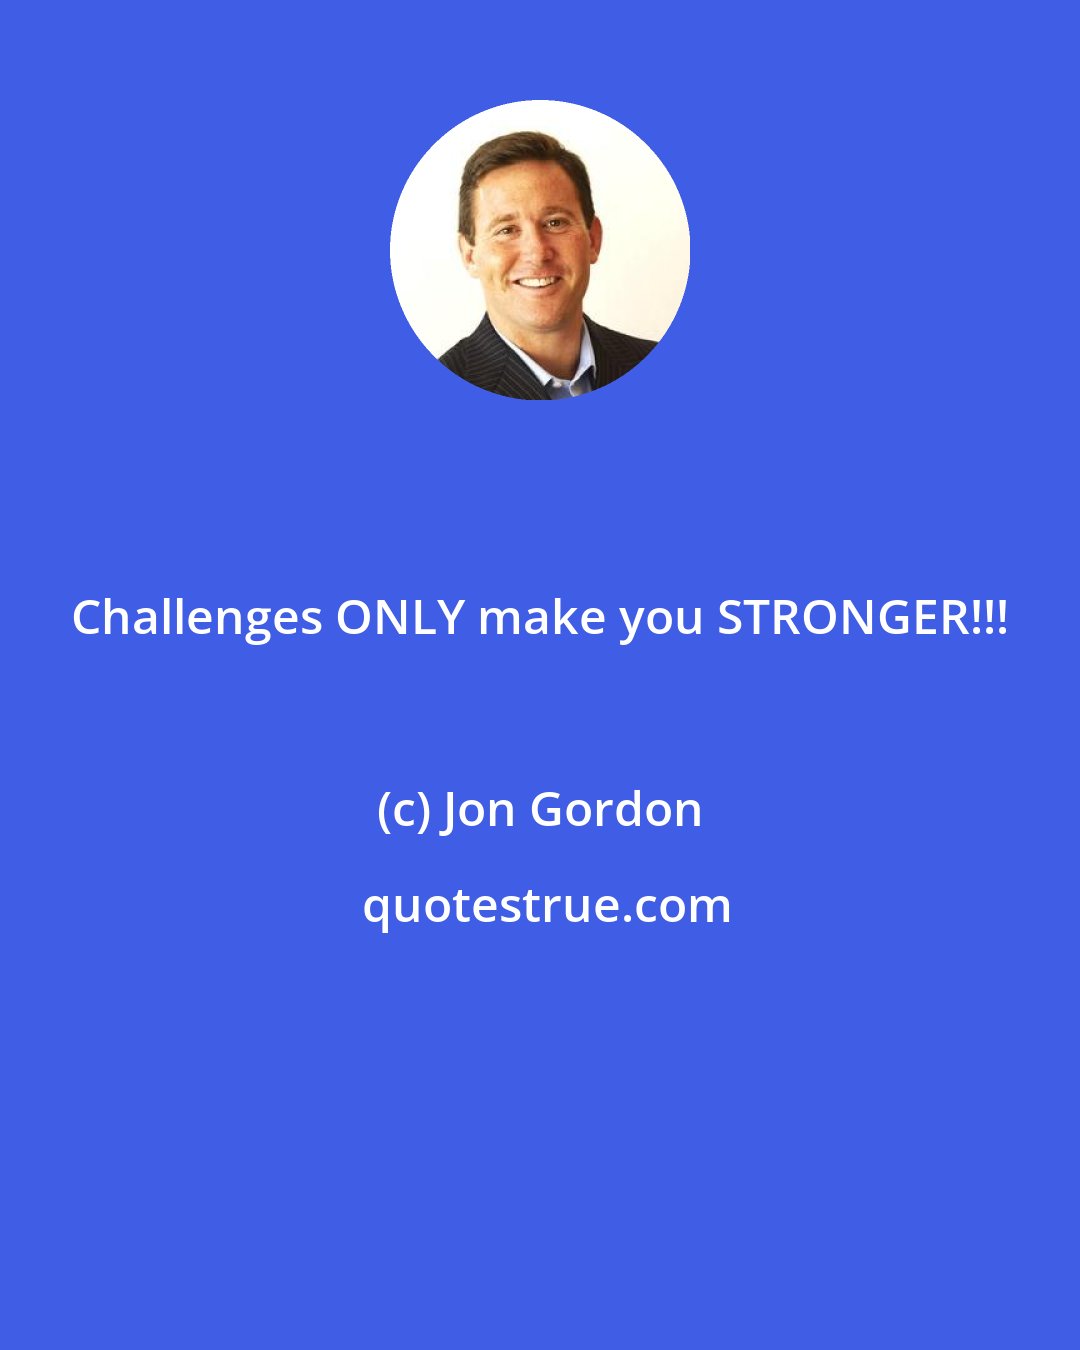 Jon Gordon: Challenges ONLY make you STRONGER!!!